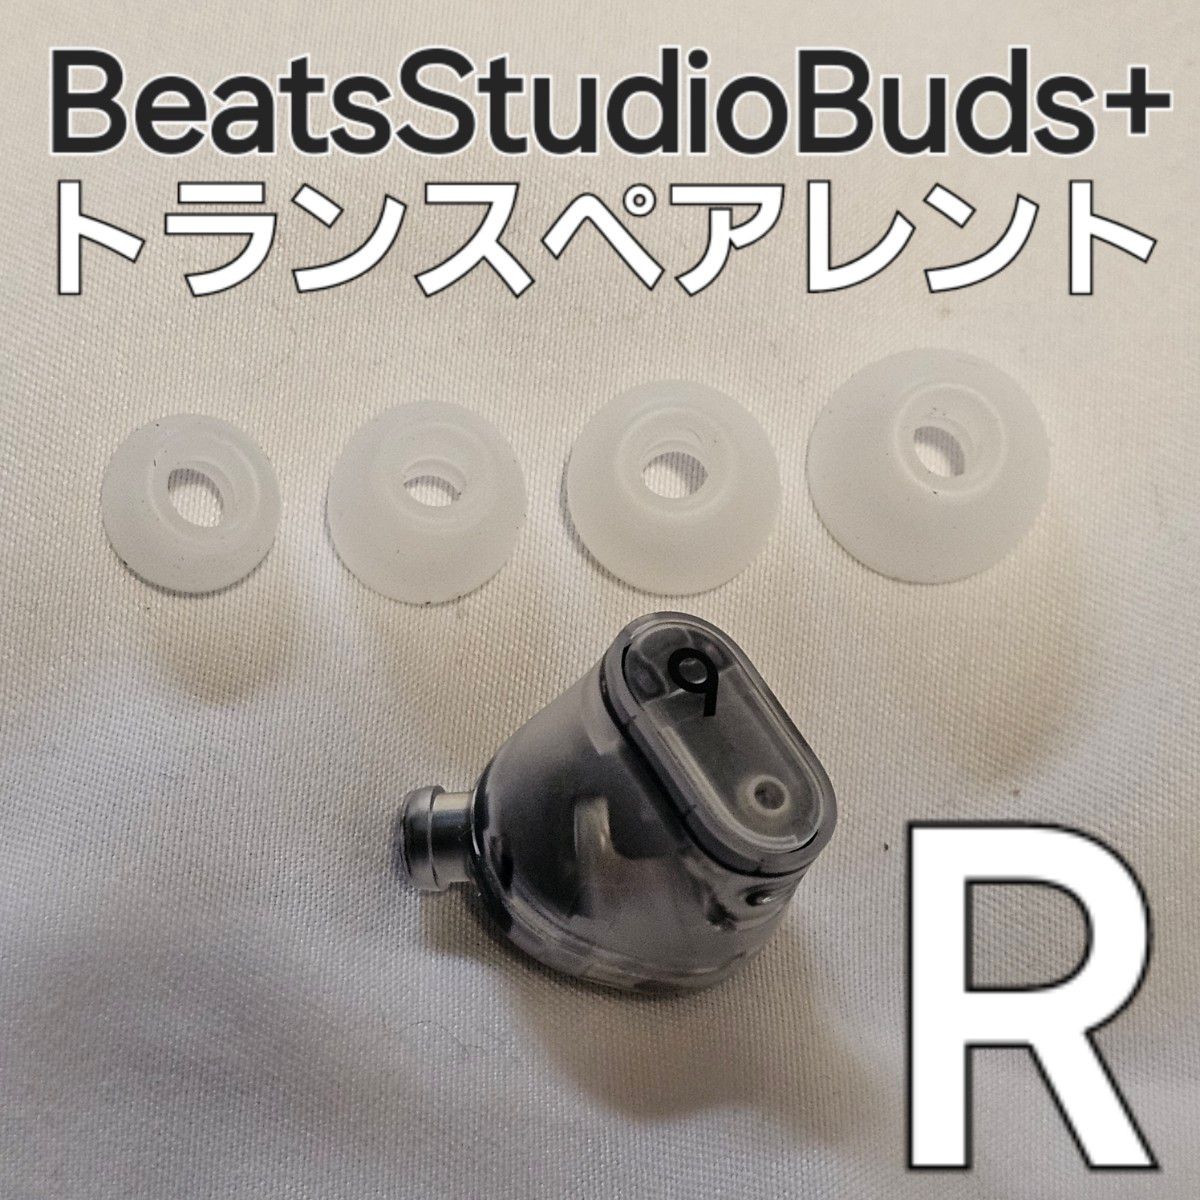 Beats Studio Buds + トランスペアレント 右耳のみ